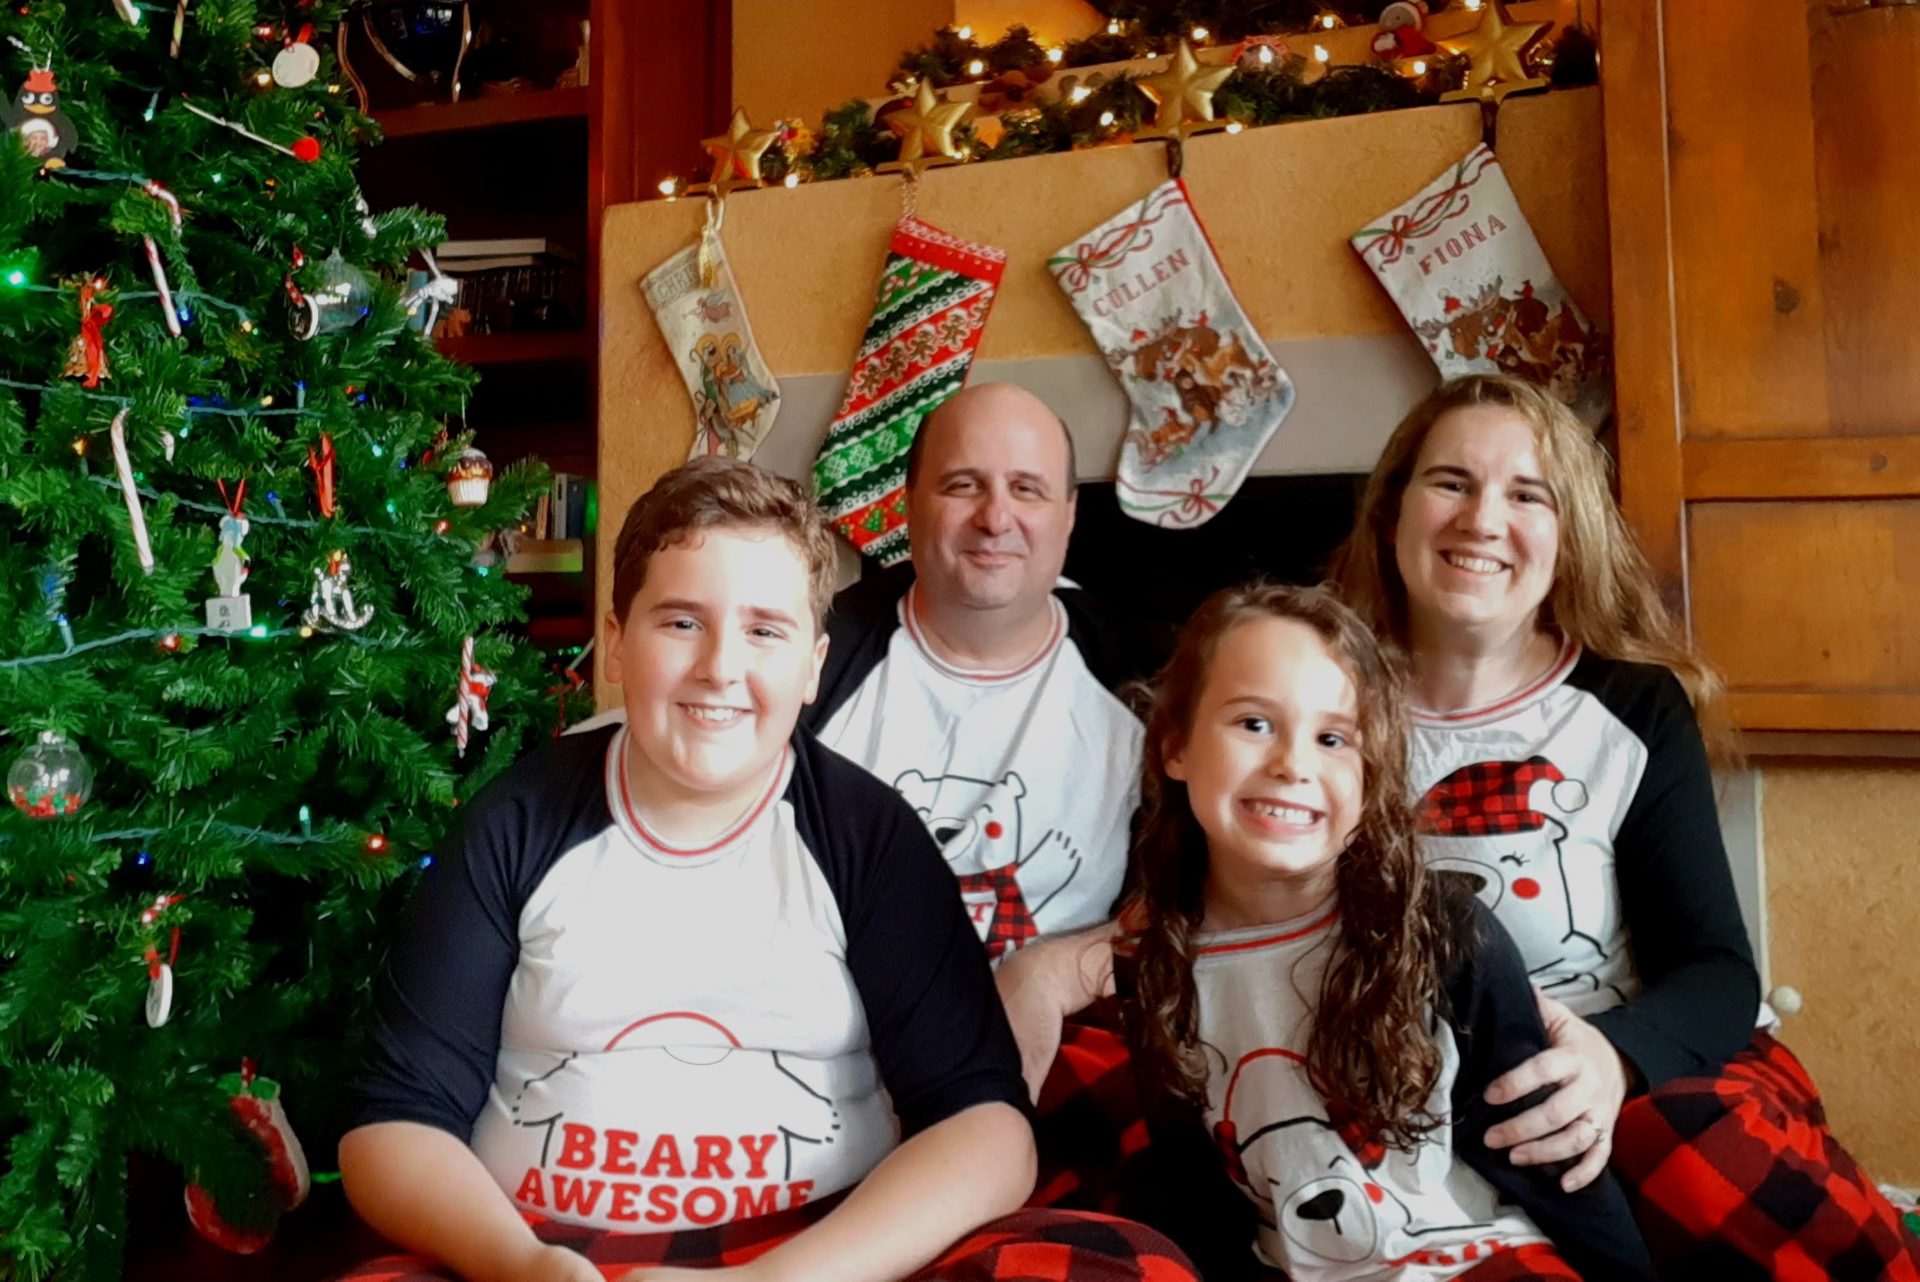 Larkins Family - Smiling family in front of Christmas stockings